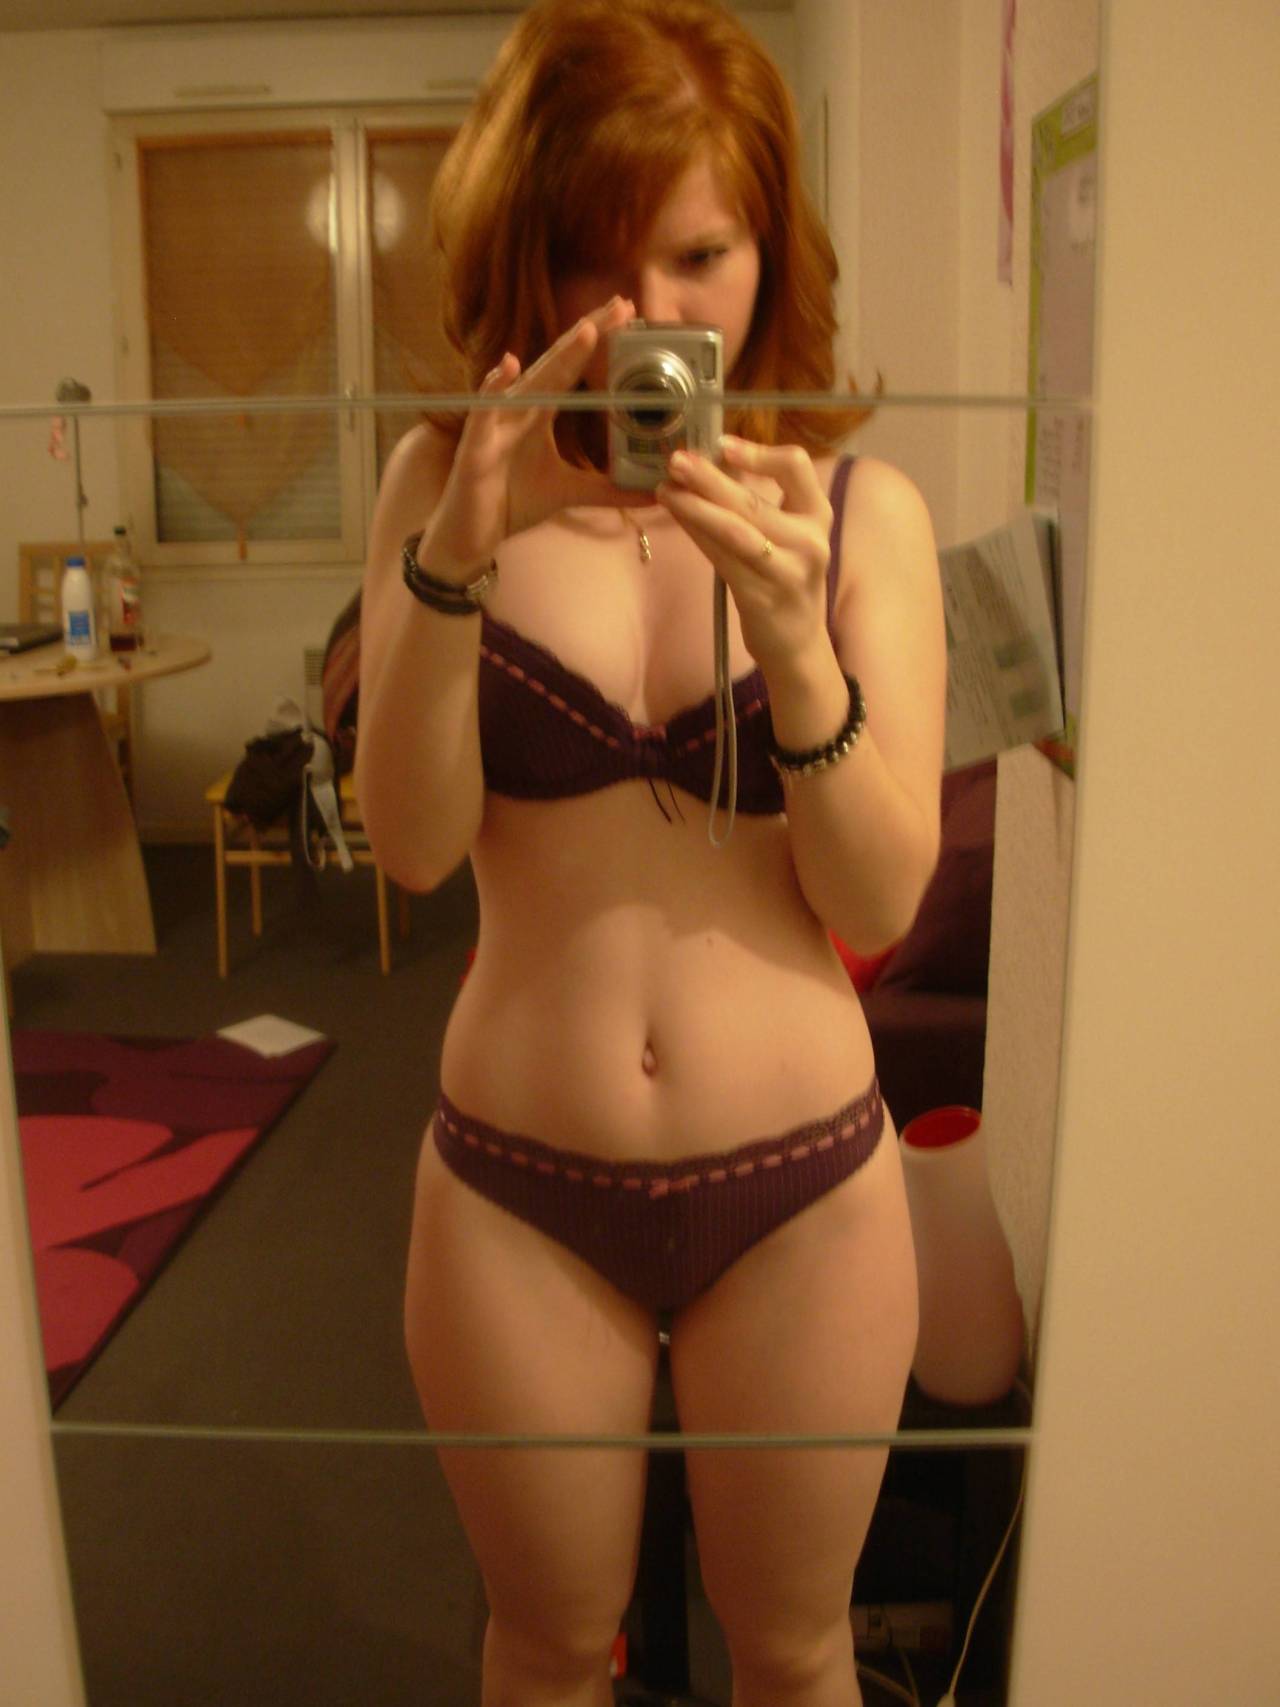 Lingerie mirror selfie babe